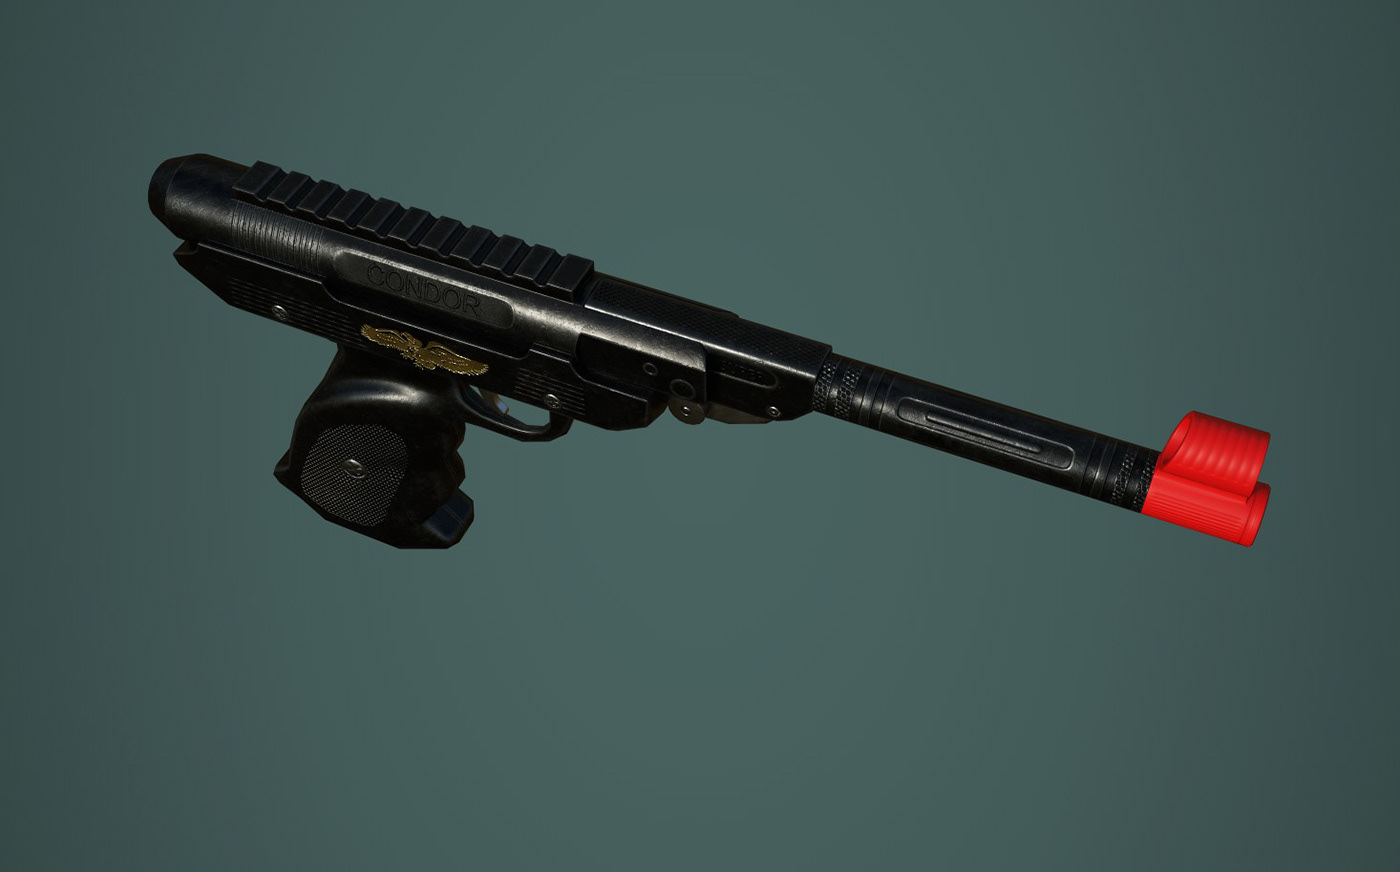 Weapon pneumatic Gun vintage italian toy condor super lowpoly GameAsset